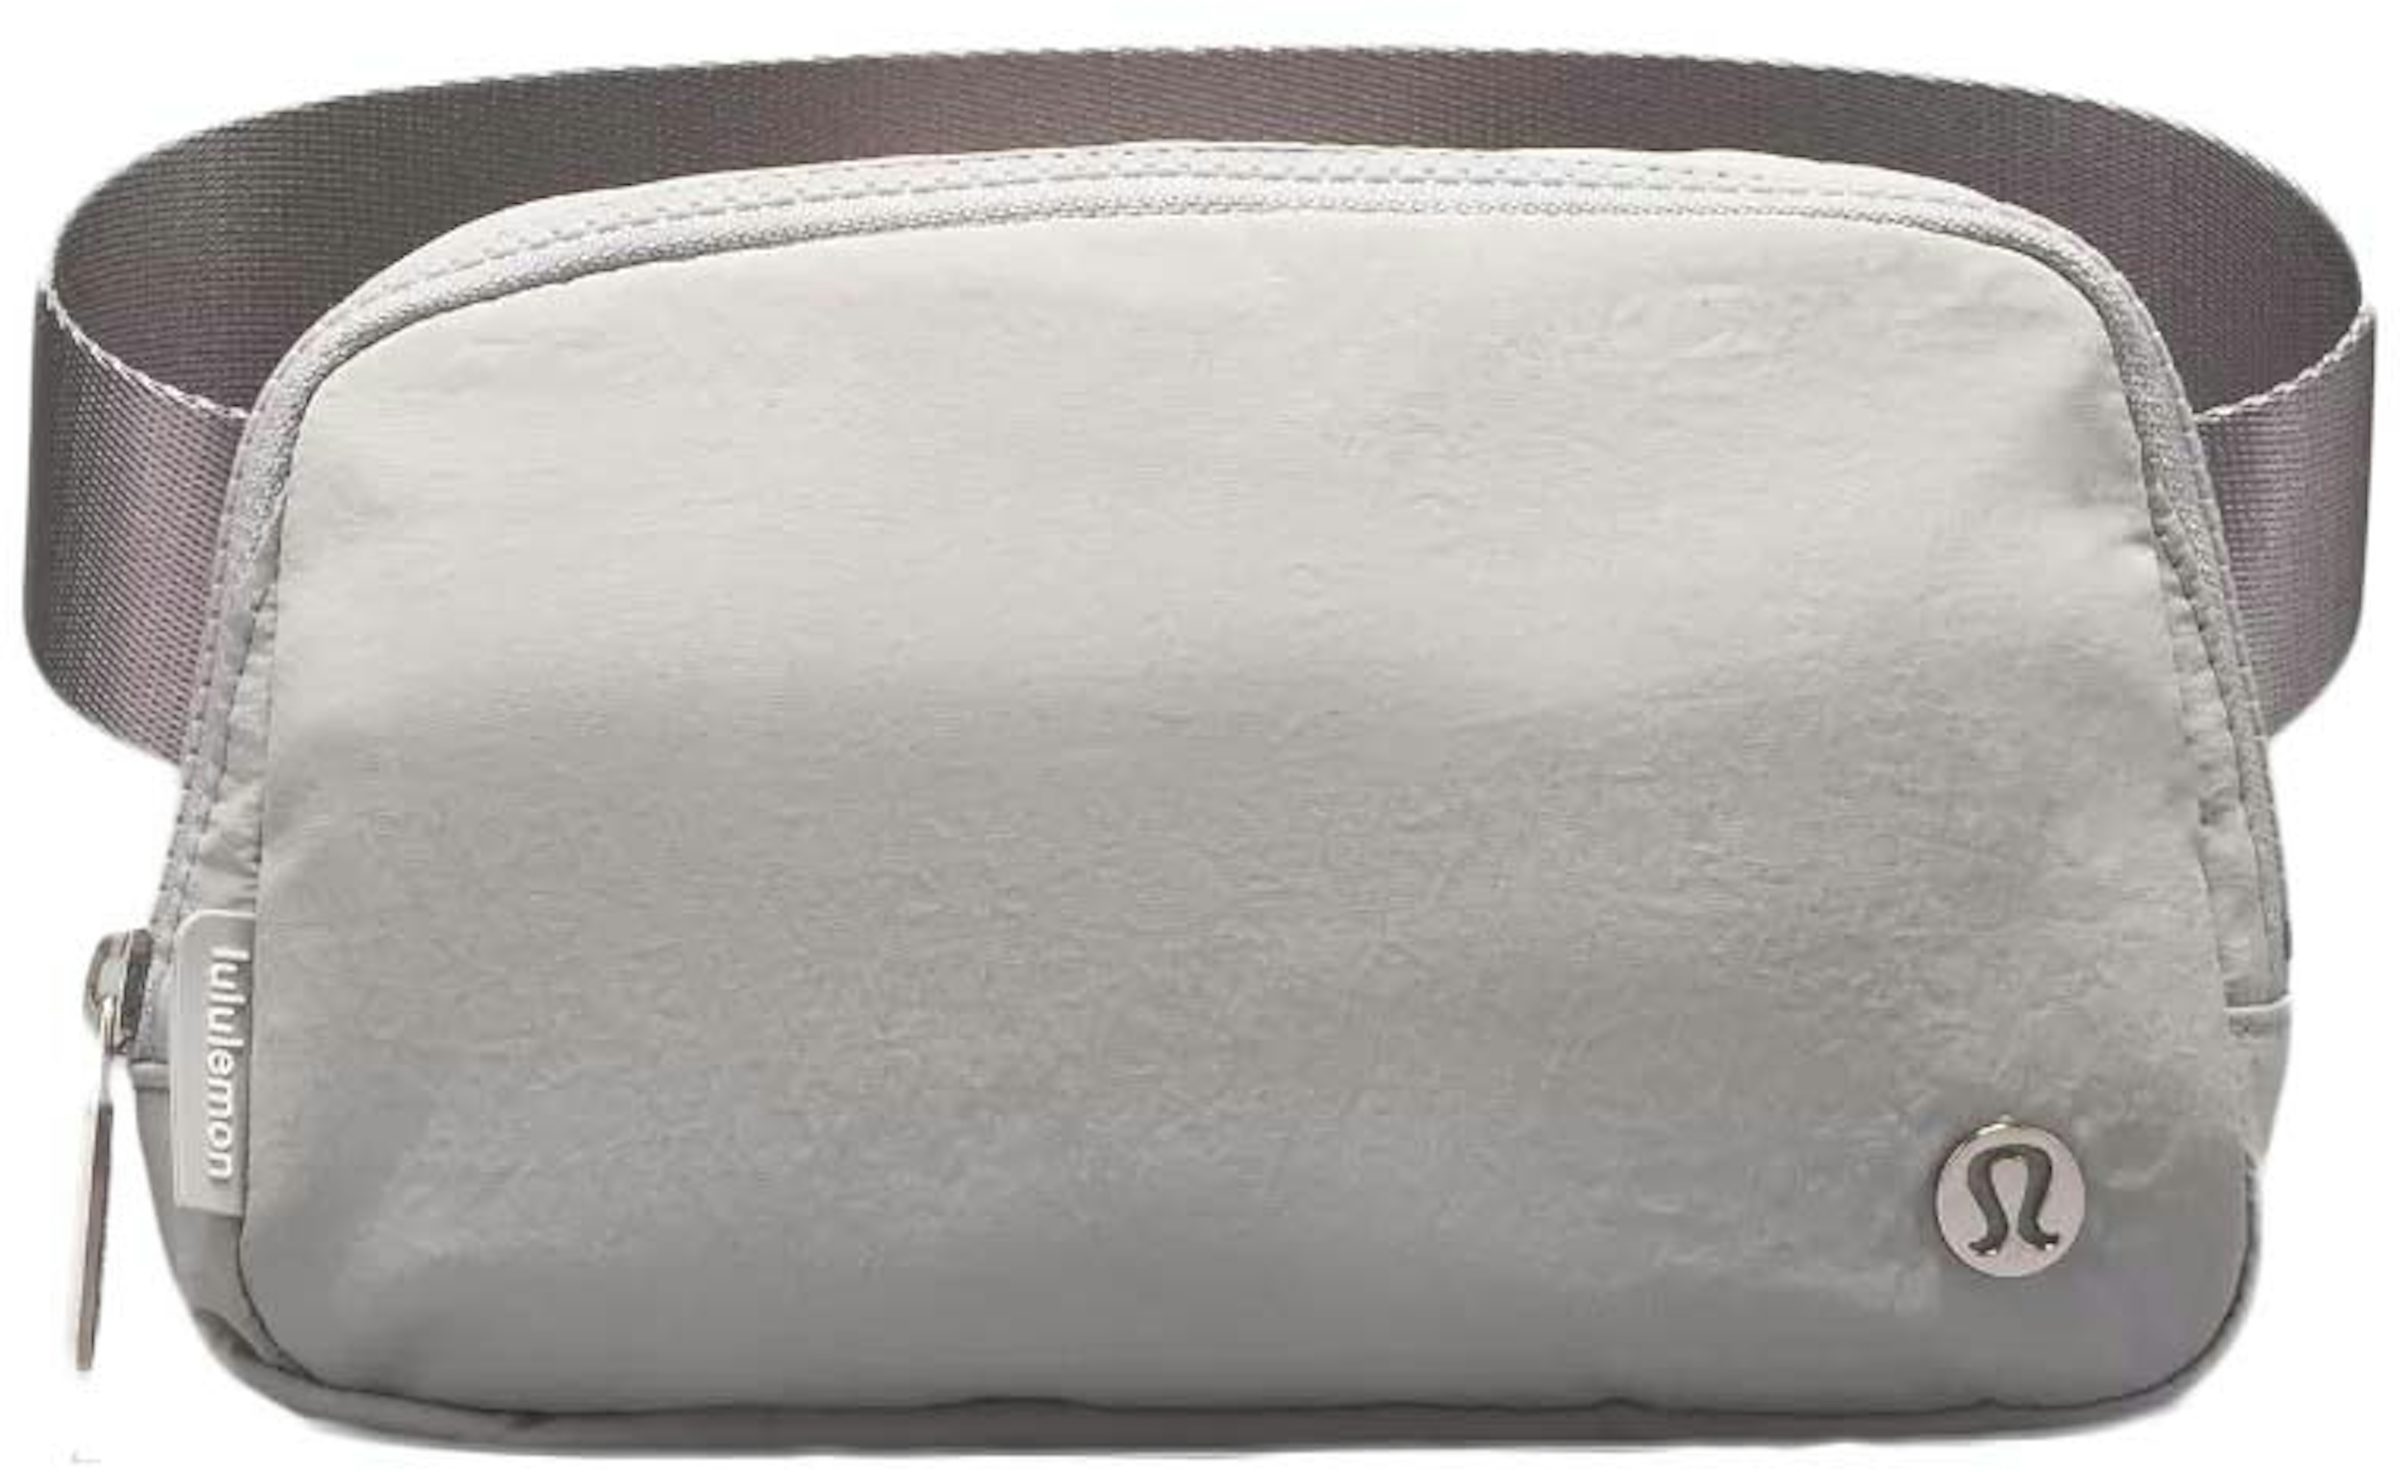 Lululemon Everywhere Belt Bag 1L - Silver/Grey/Silver Drop/White